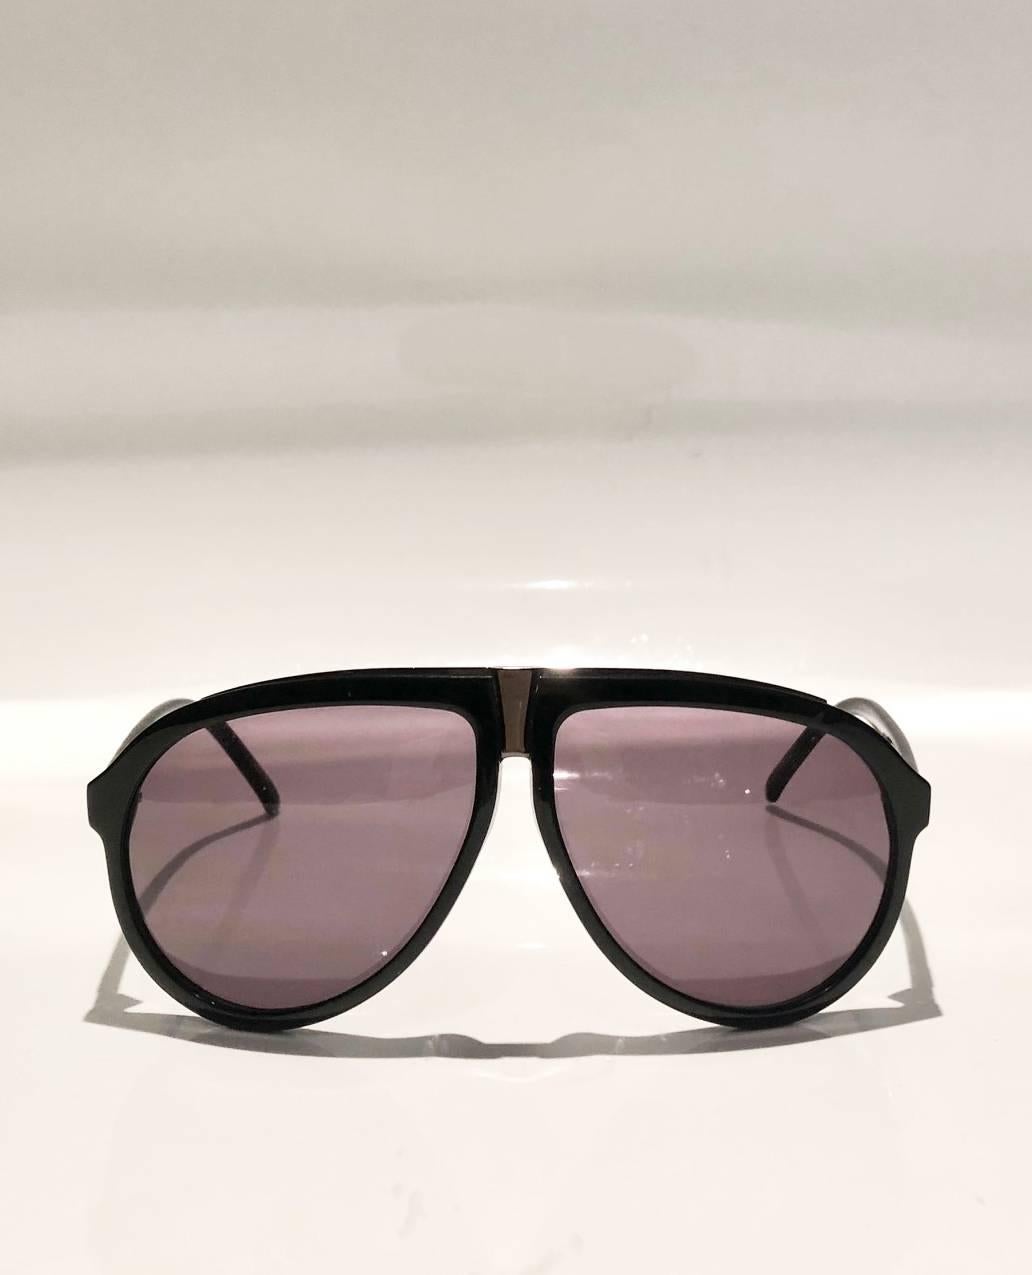 Yves Saint Laurent  Aviator Sunglasses, oversized, black resin, black lenses 

Condition: vintage, excellent, 2000s 

